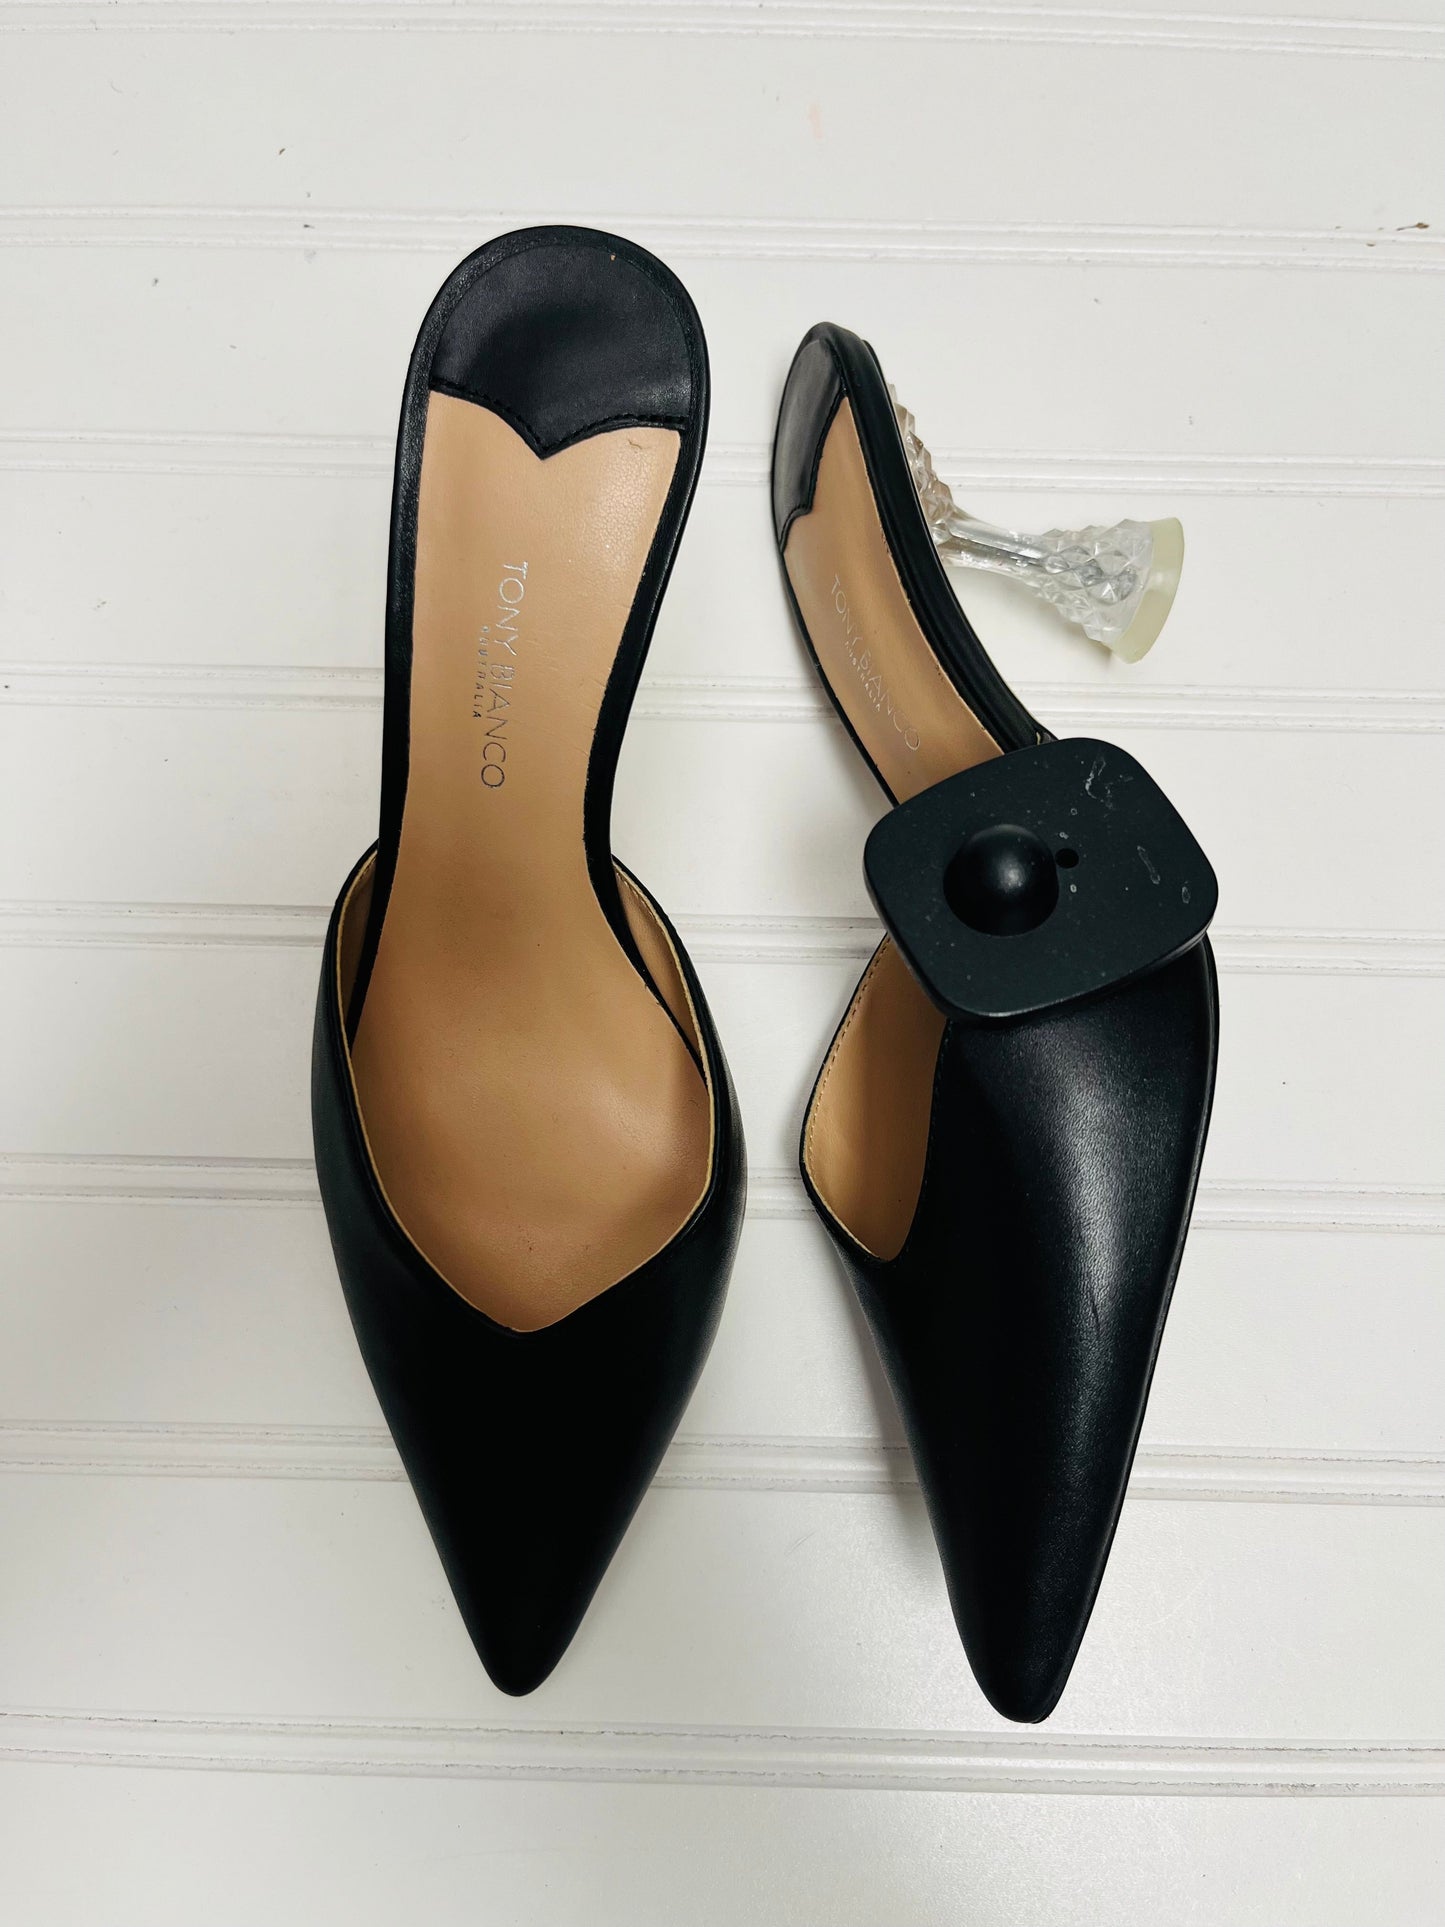 Shoes Heels Stiletto By tony bianco   Size: 6